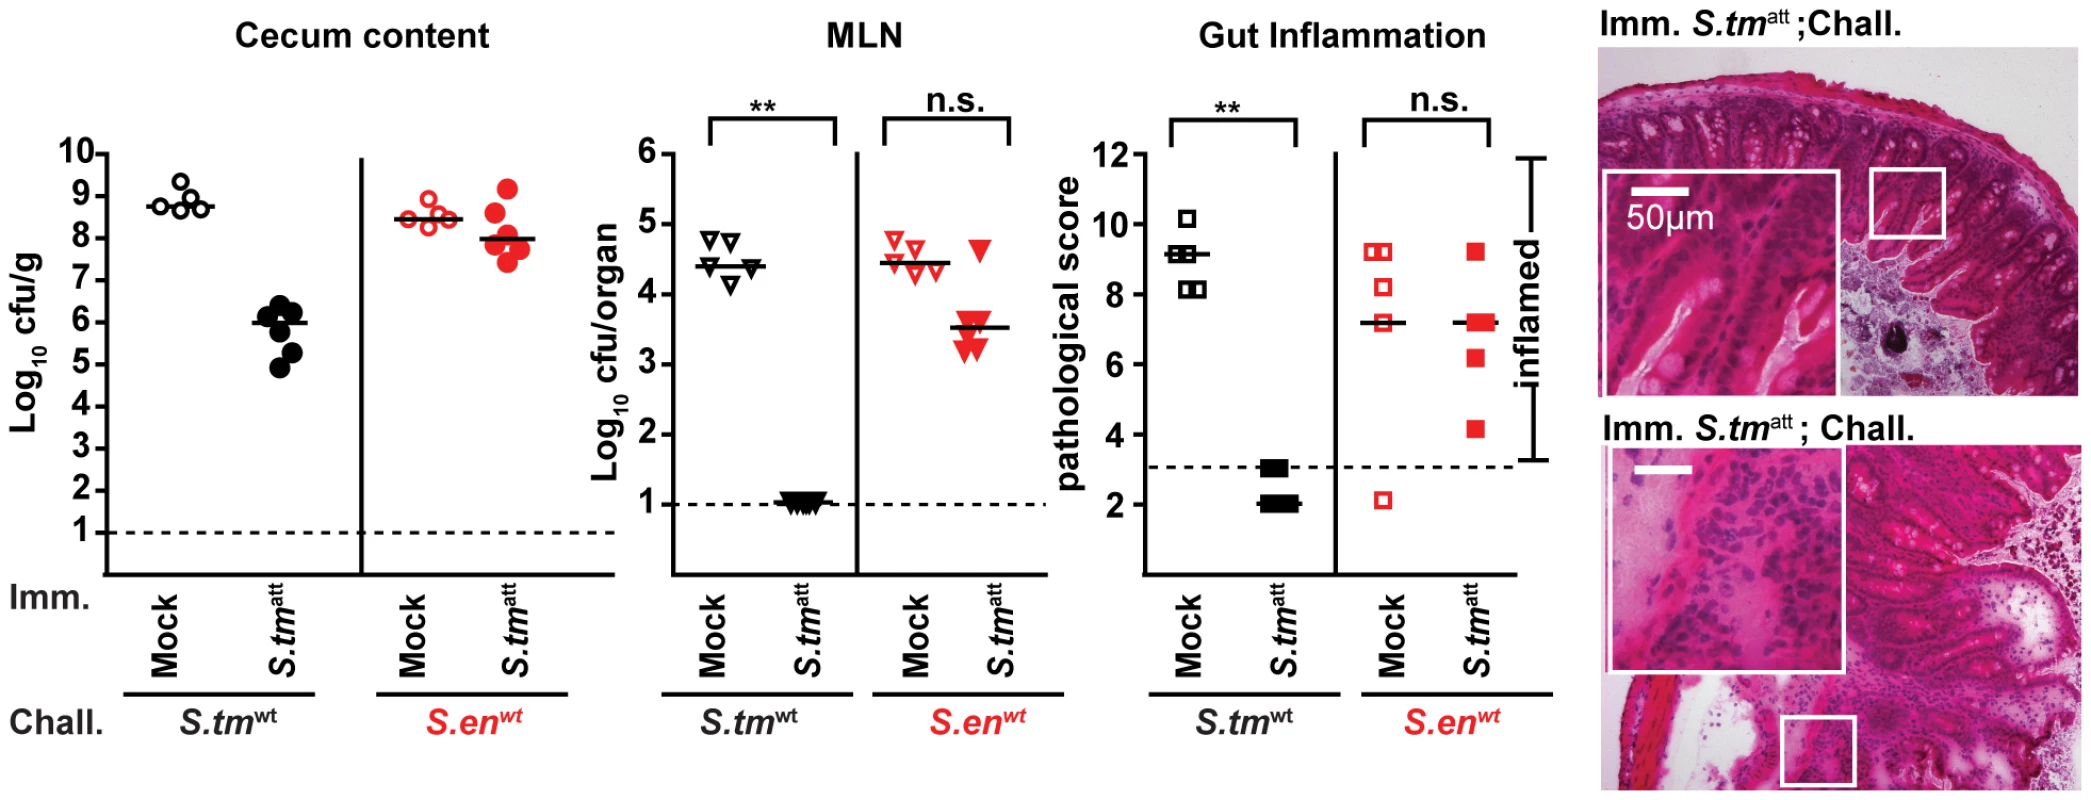 O-antigen specific protection from enteropathogenesis of <i>S. tm</i><sup>att</sup>-immunized L-mice.